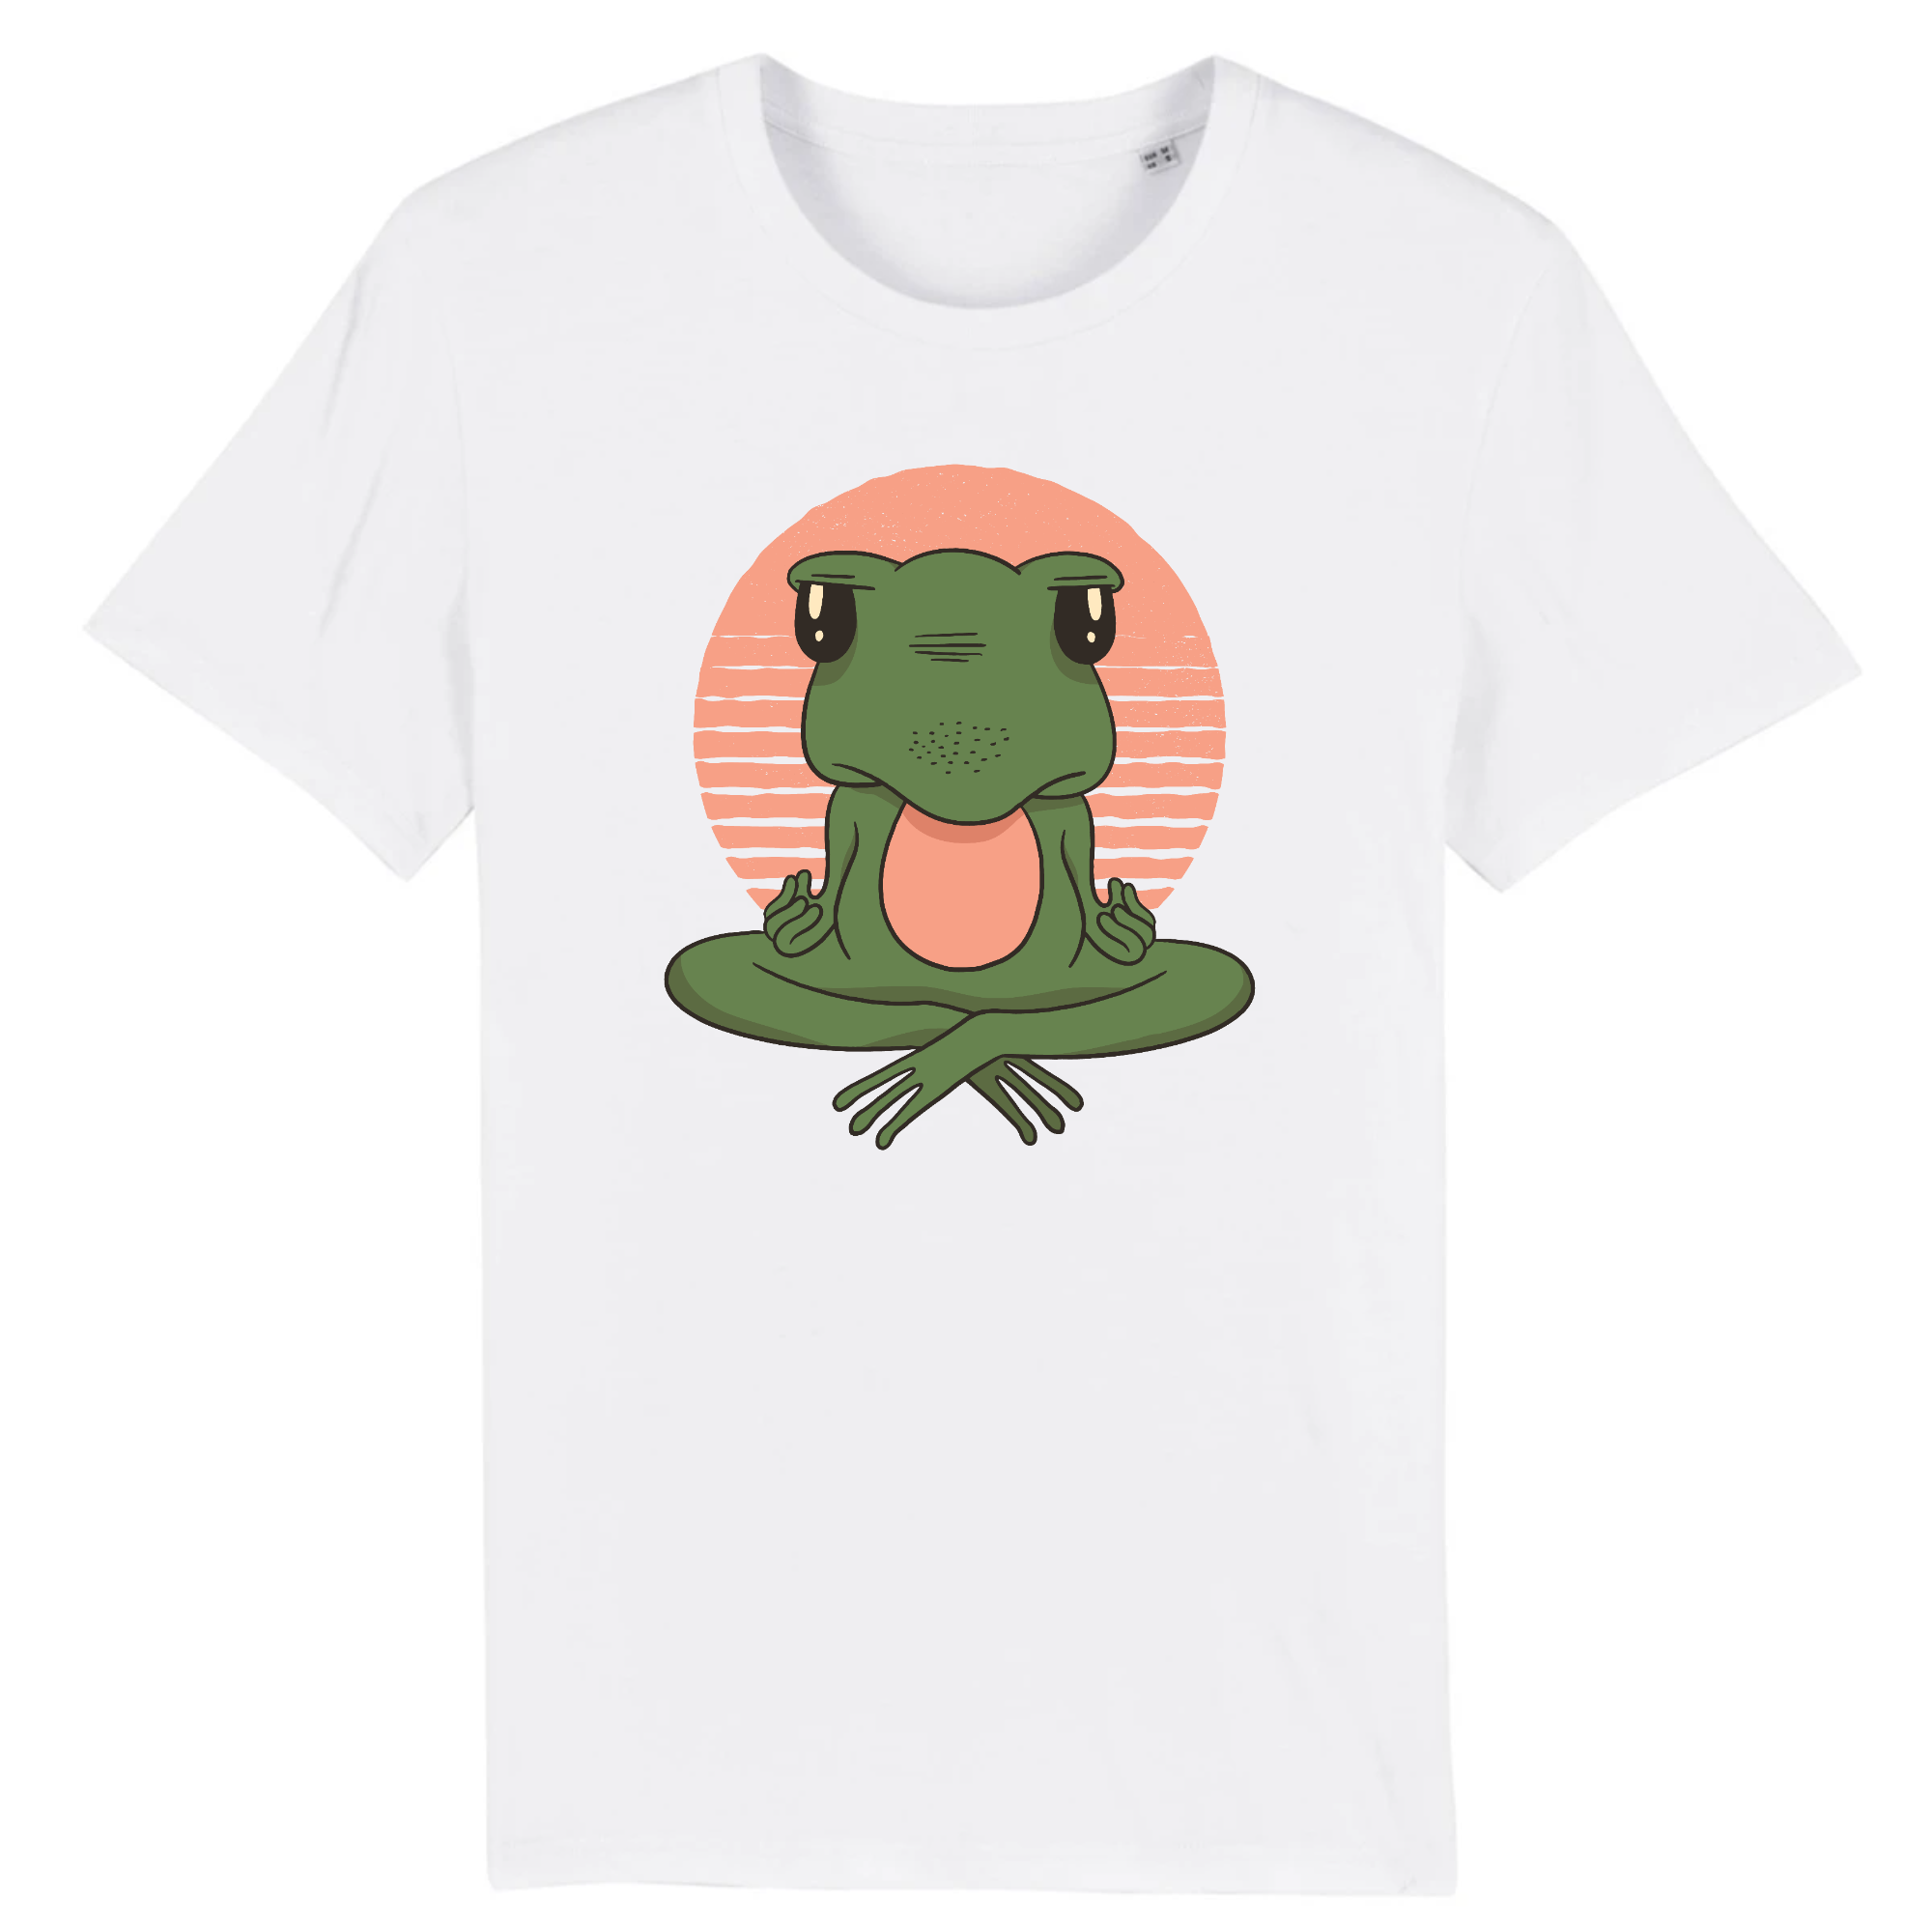 T-shirt bio-frog yoga vintage gentlemen